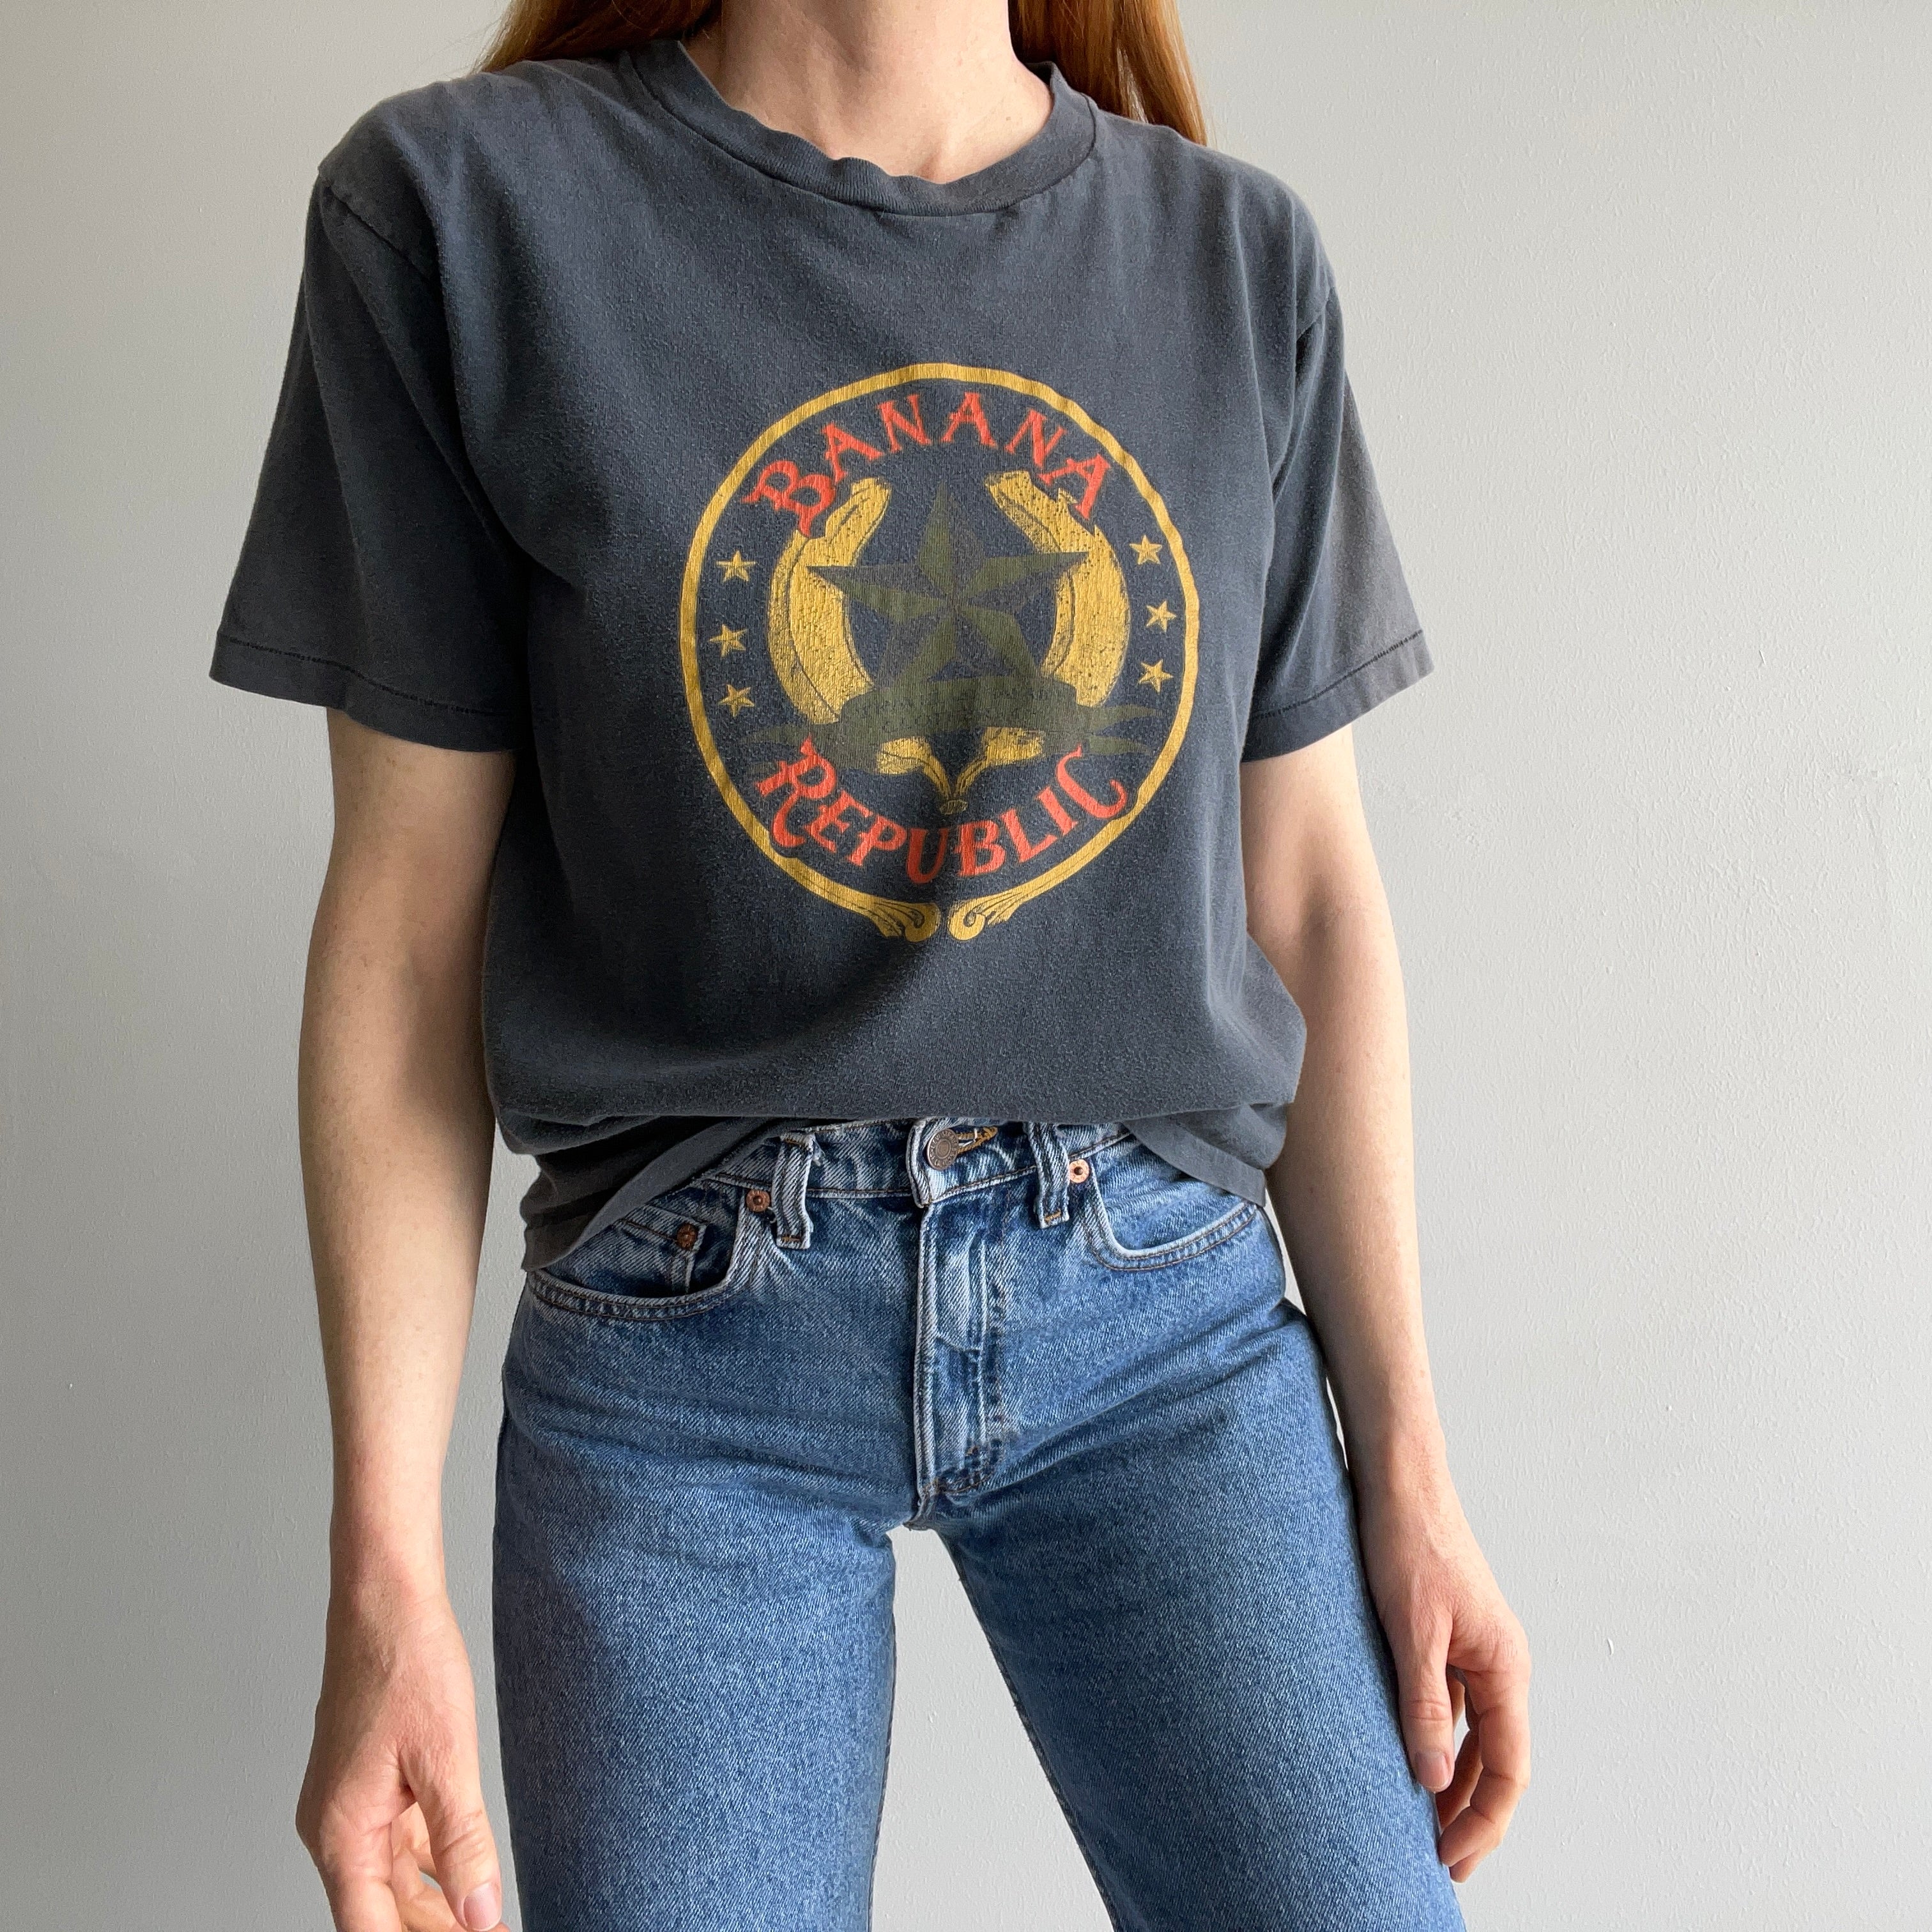 Pre 1983 OG USA Made Banana Republic Travel & Safari Clothing Company T-Shirt